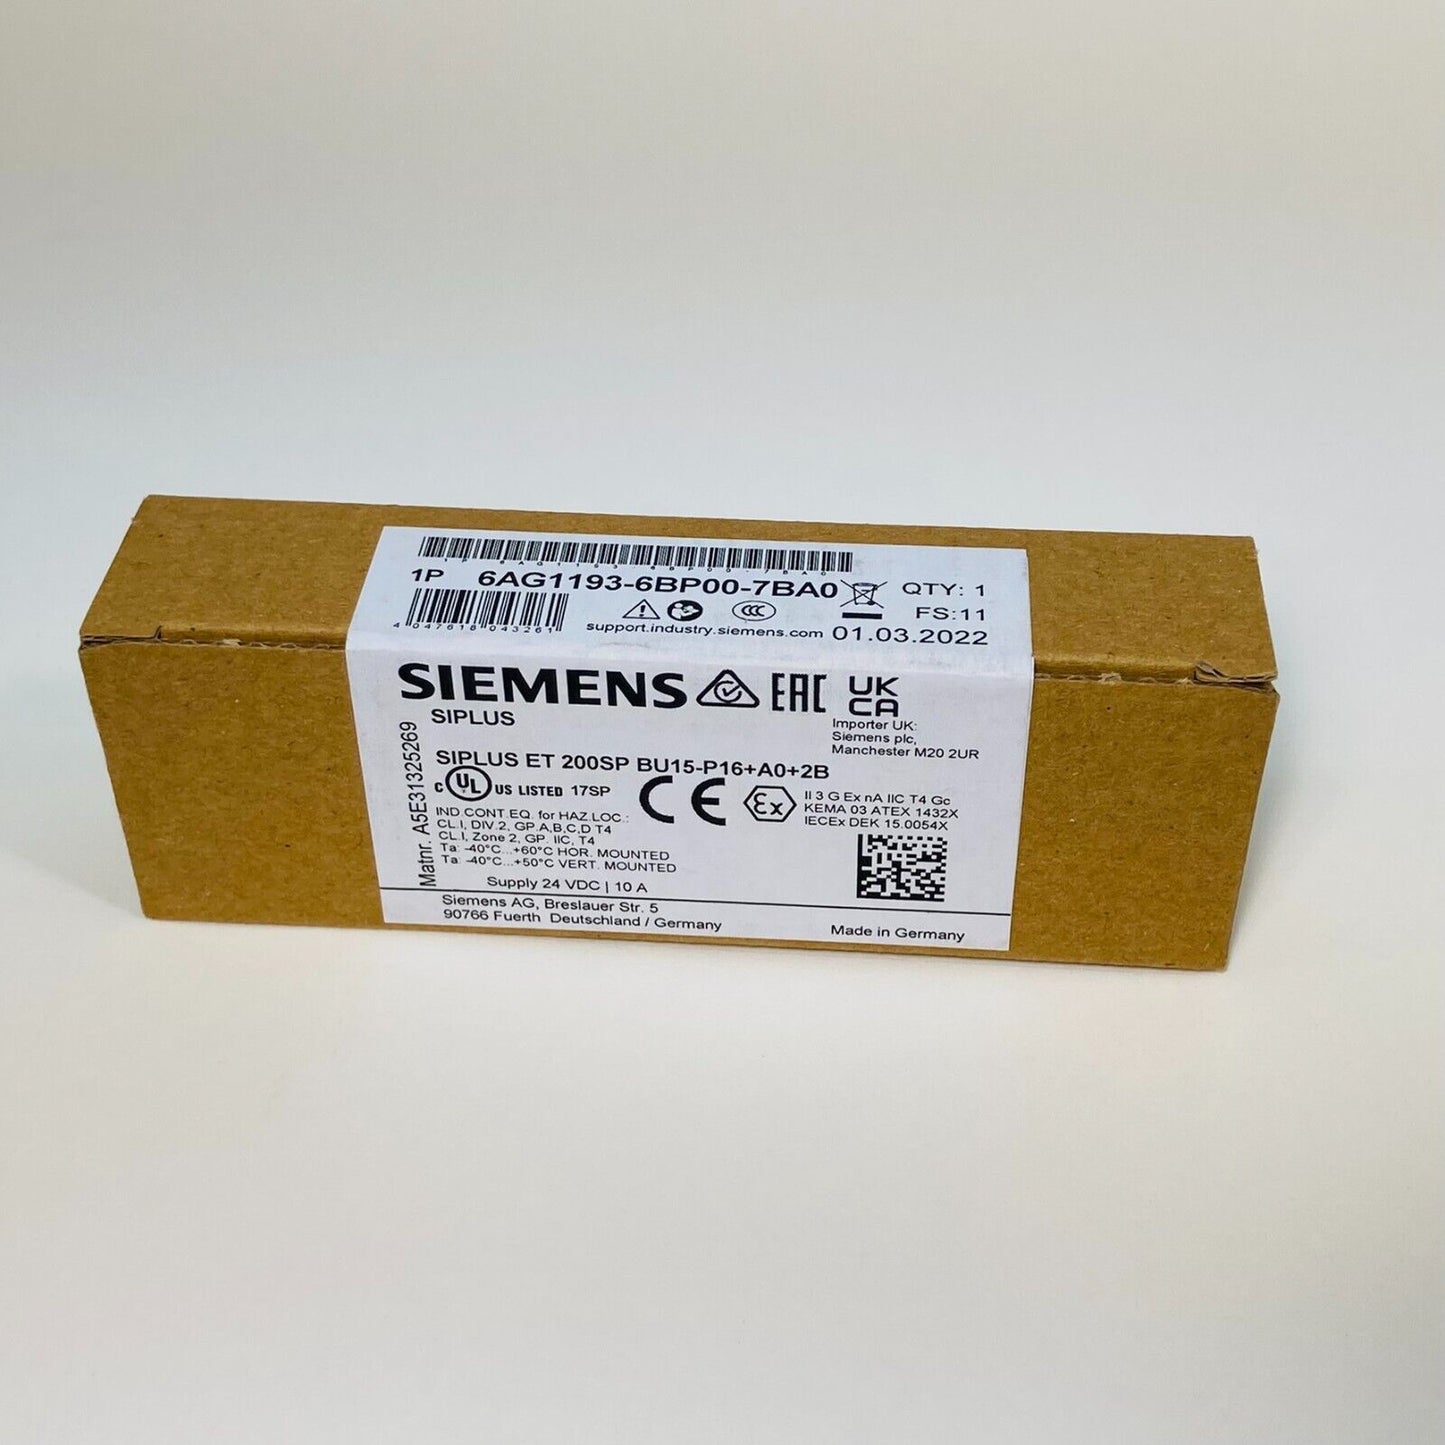 NEW Siemens 6AG1193-6BP00-7BA0, SIPLUS ET 200SP BU15-P16+A0+2B, 2022 stock